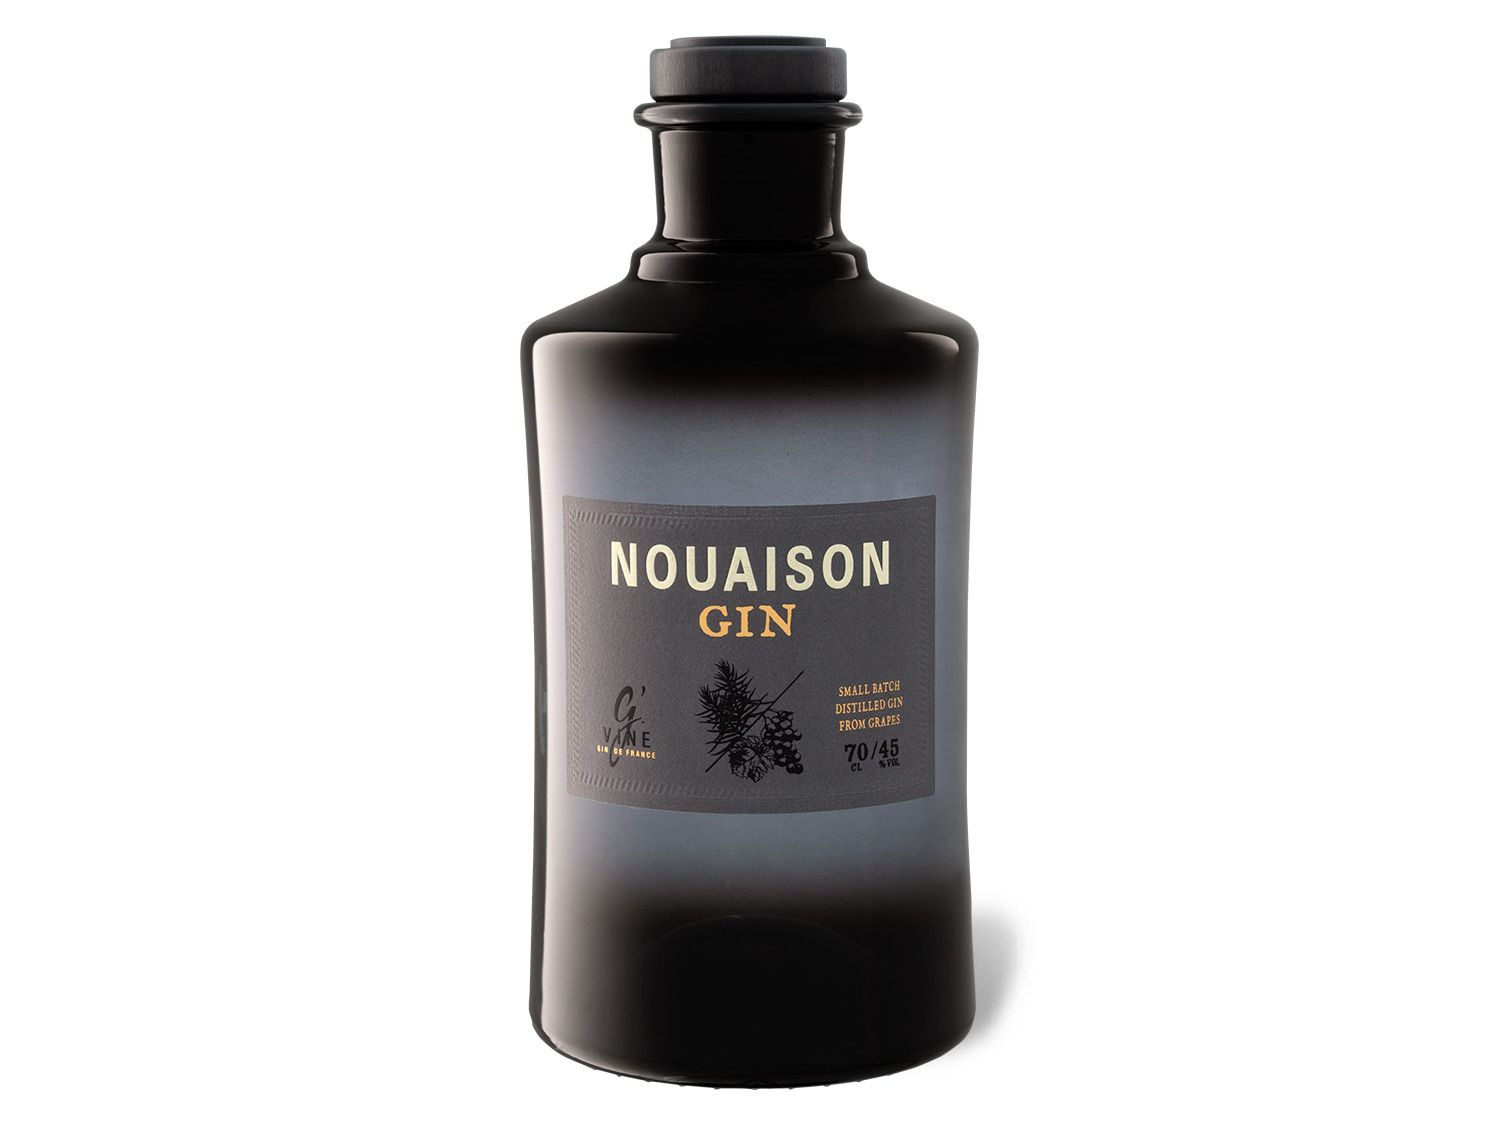 Nouaison Gin by G\'Vine 45% | LIDL Vol online kaufen